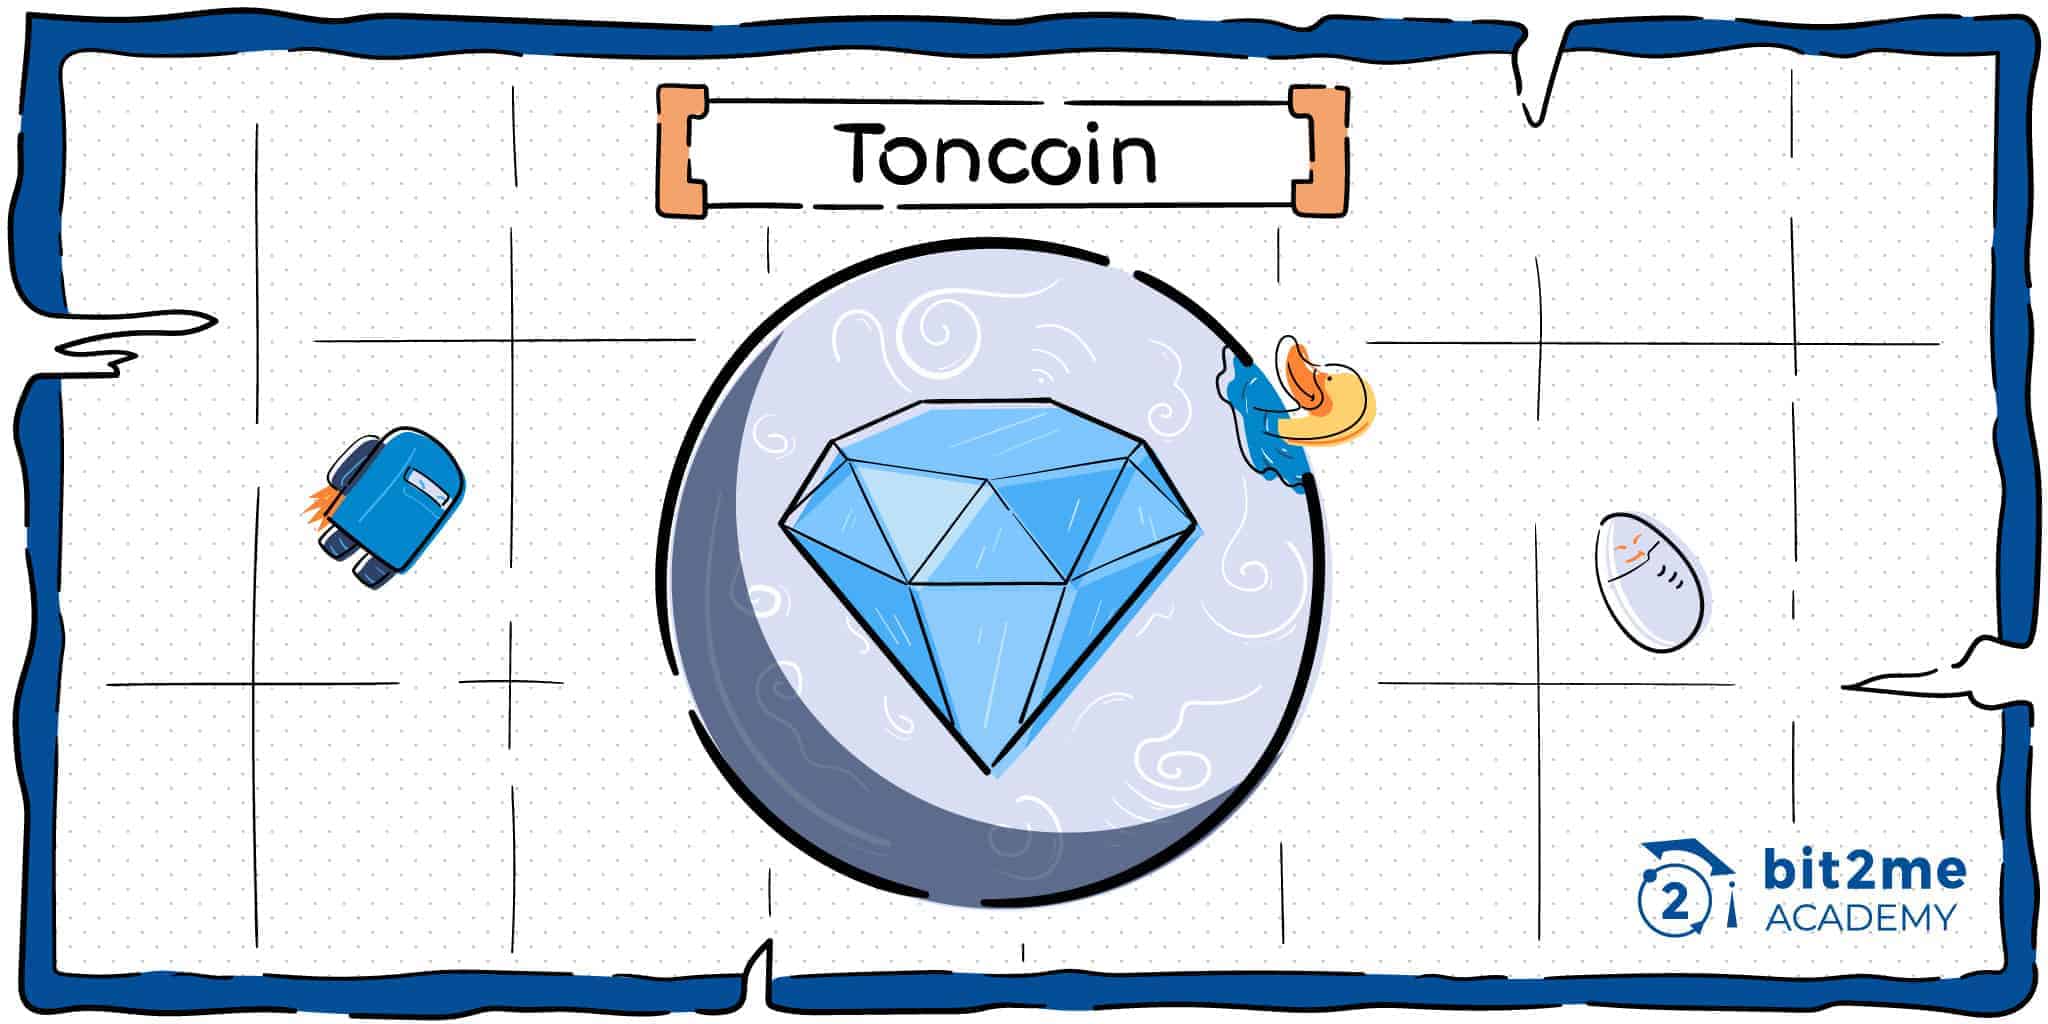 Toncoin-Bit2meacademy (1)